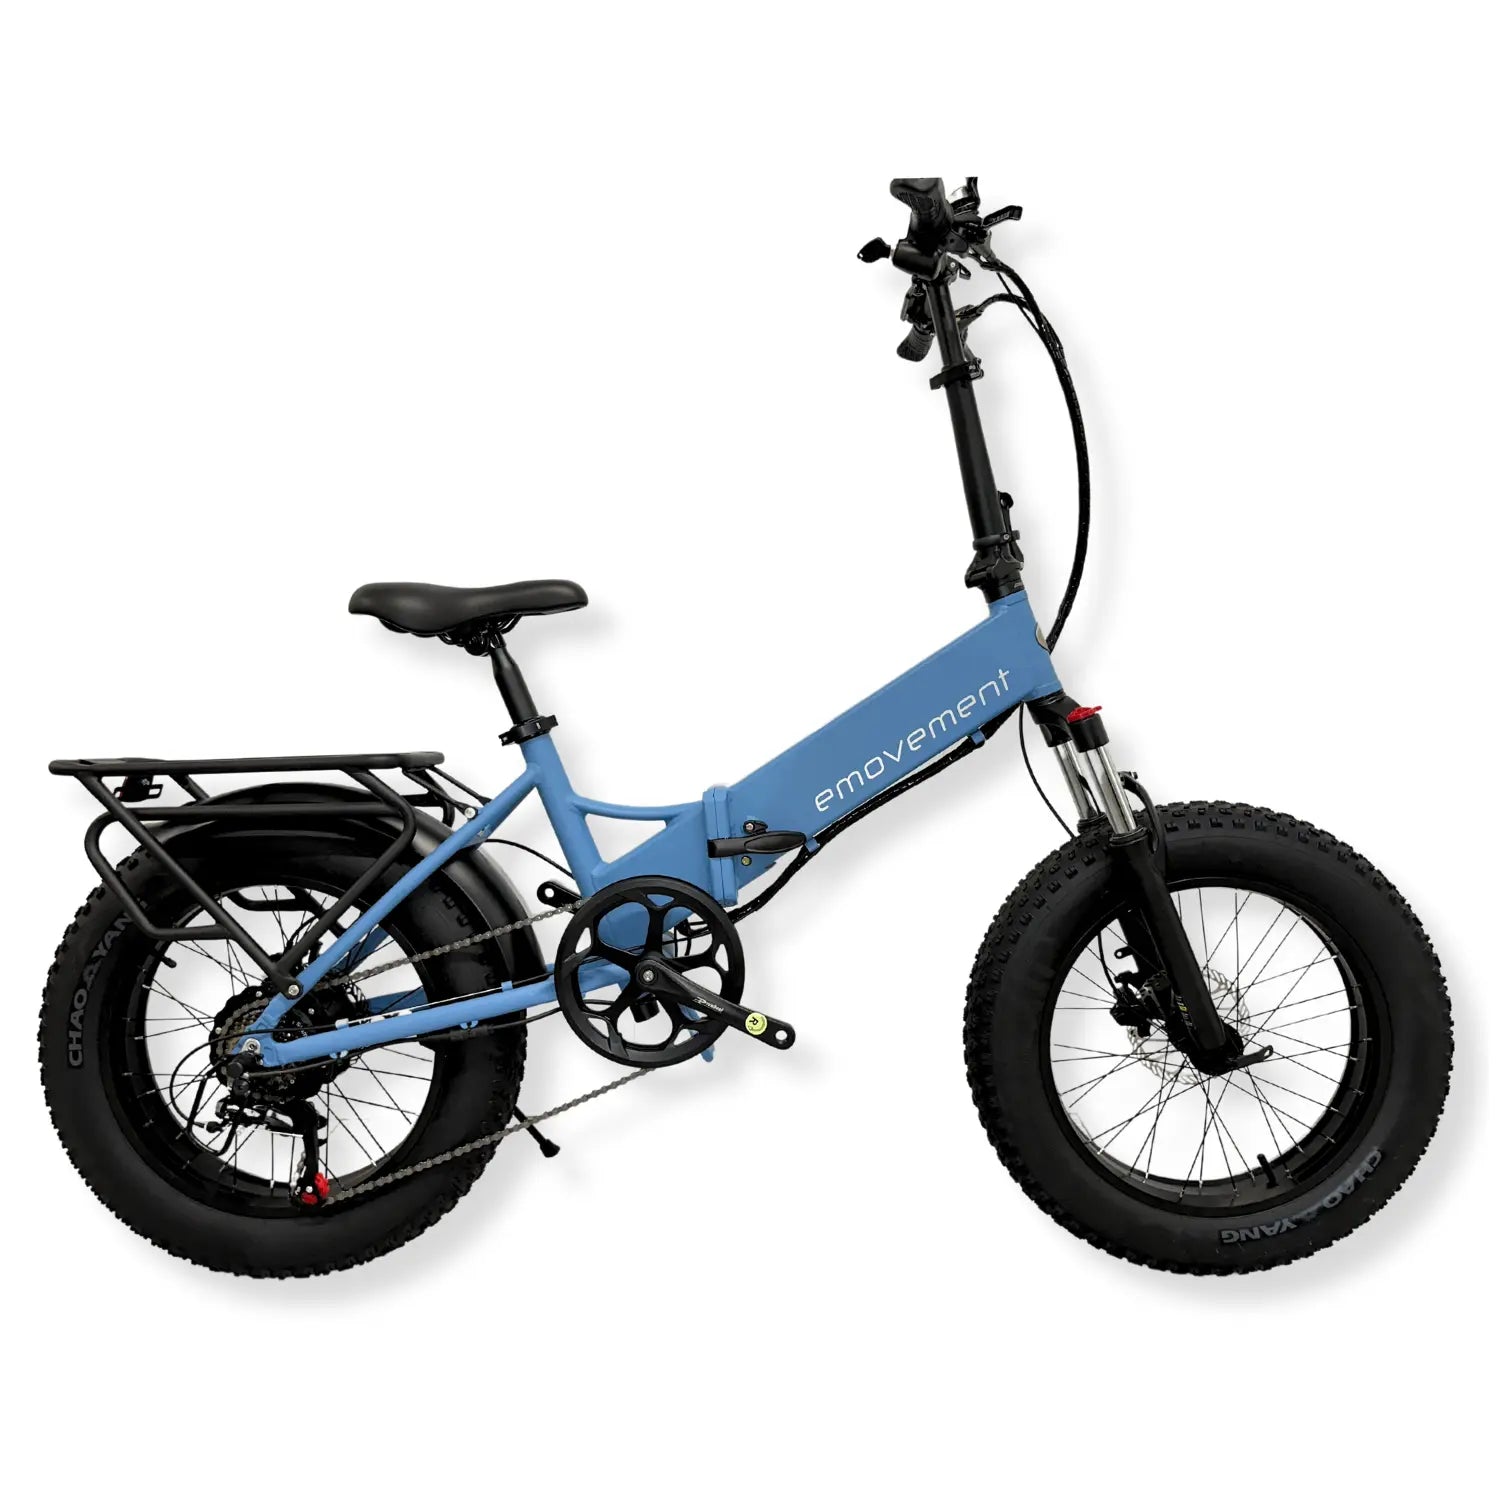 E-Movement E-Bike Pixie 500W 14ah 48v Battery – Low Folding Frame Fat Bike in Pastel Blue